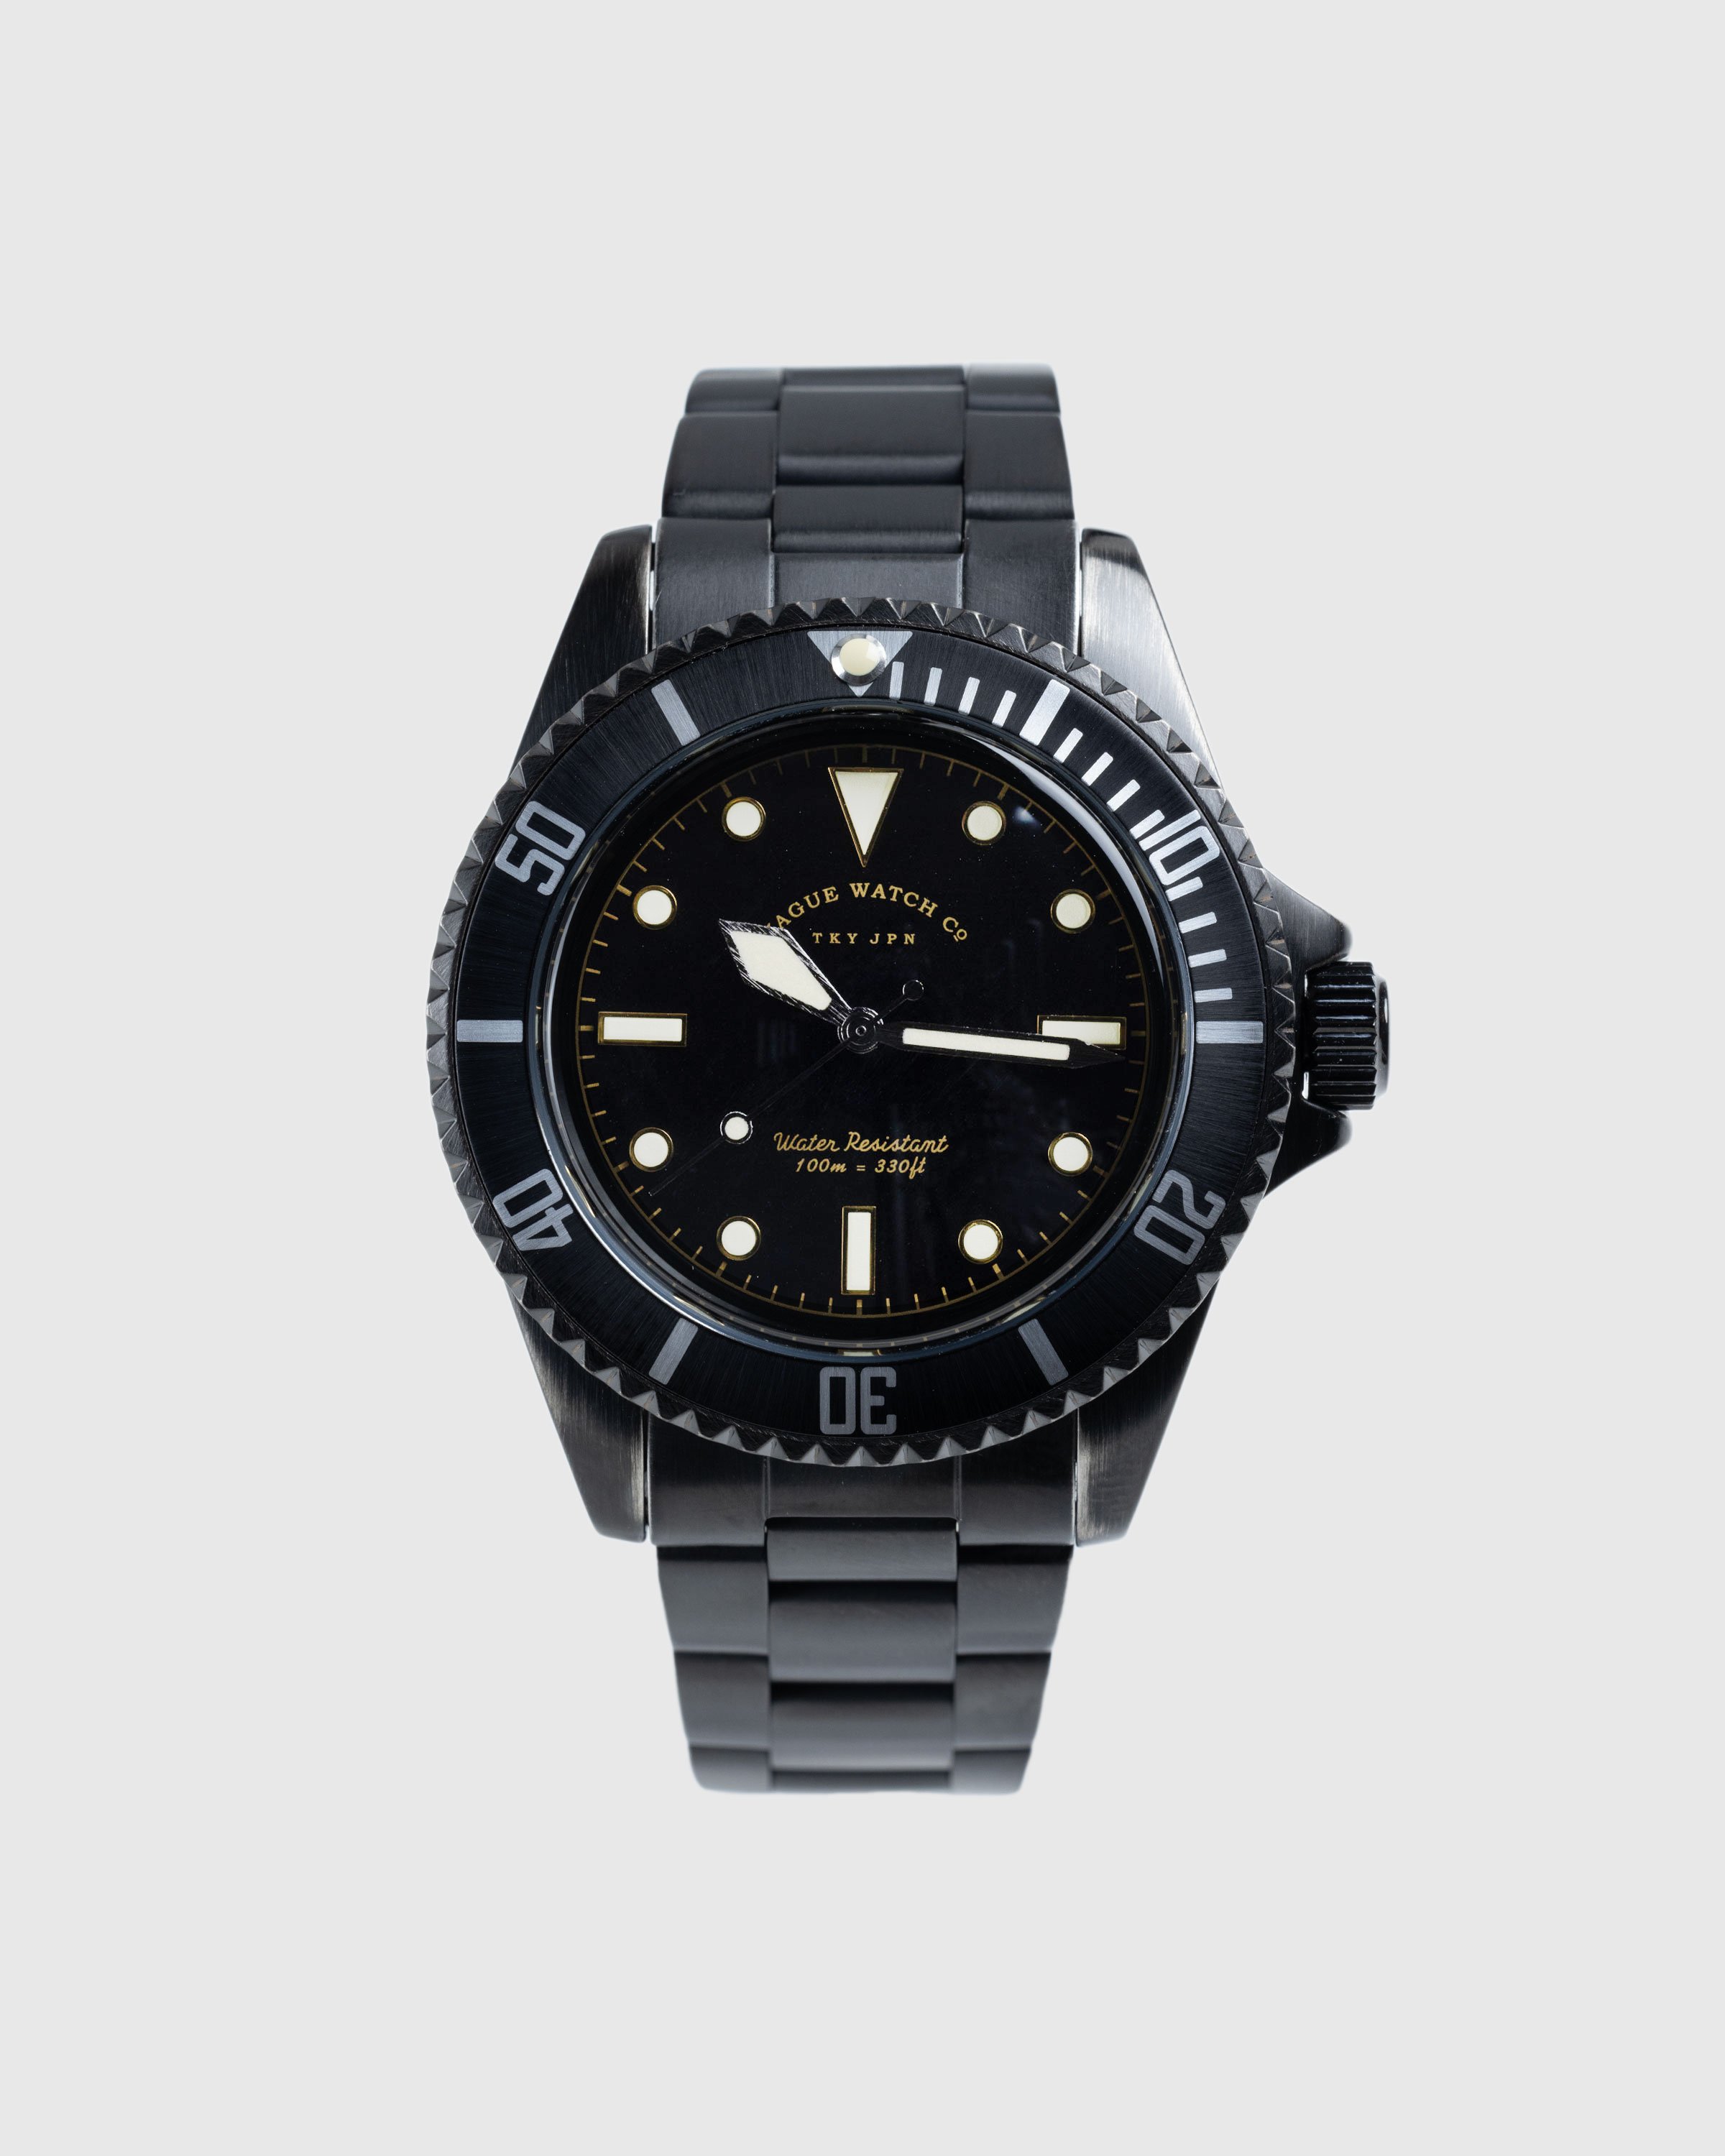 Vague Watch Co. – Black Sub Steel | Highsnobiety Shop